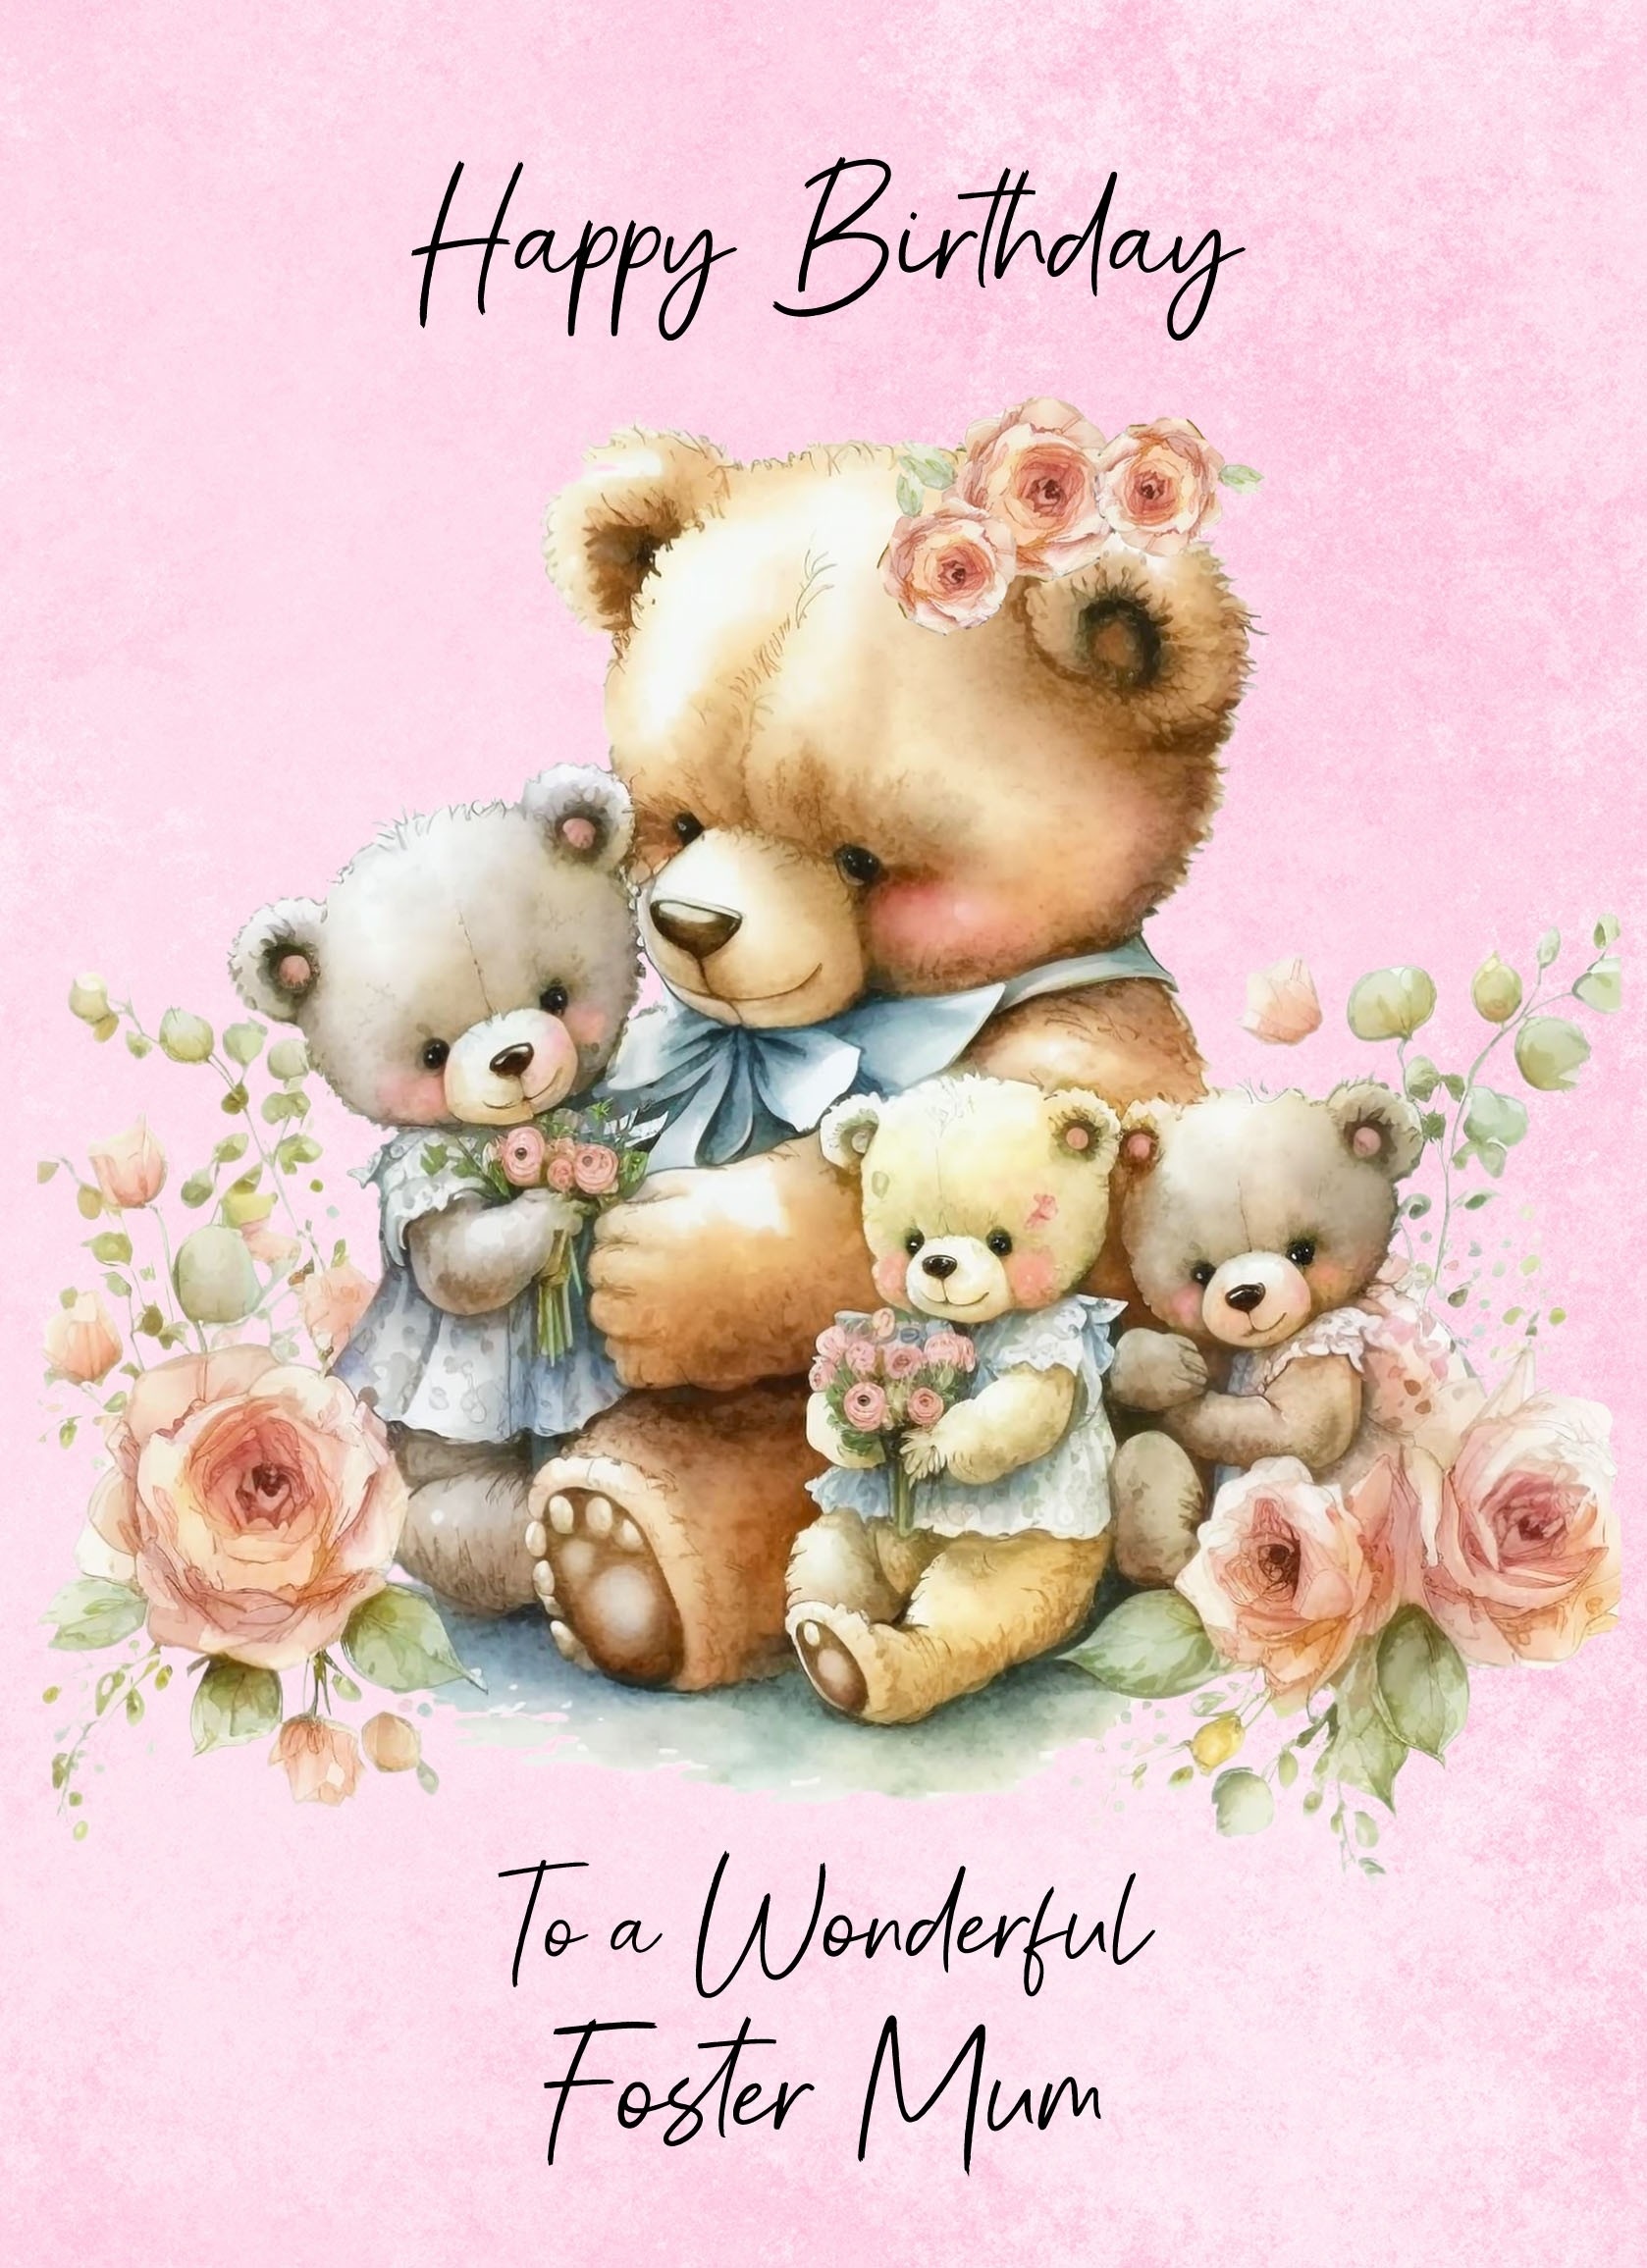 Cuddly Bear Art Birthday Card For Foster Mum (Design 1)